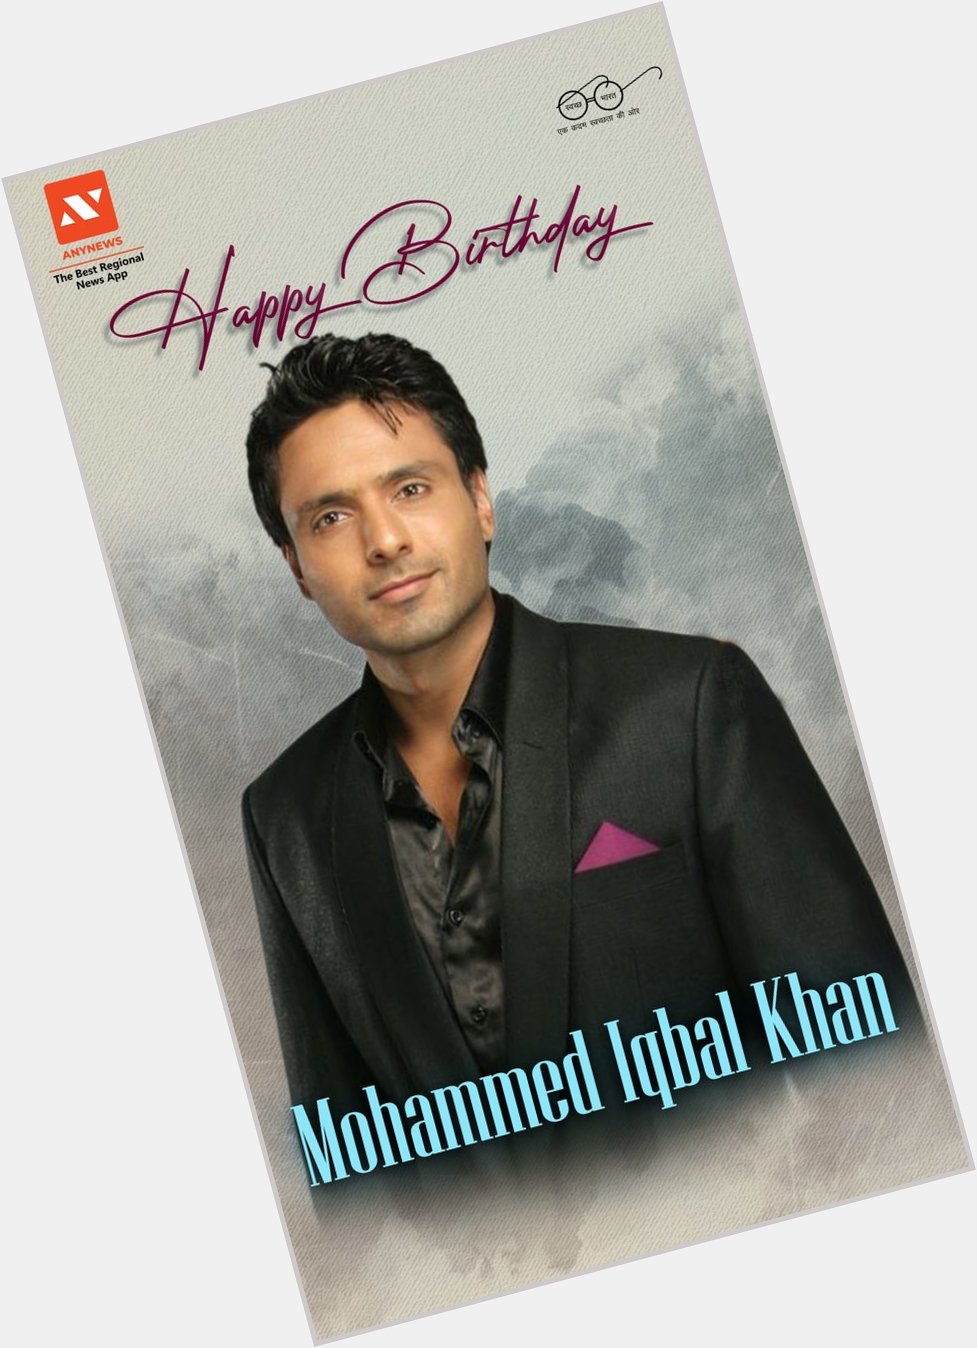 AnyNews wishes Mohammed Iqbal Khan a very Happy Birthday.    